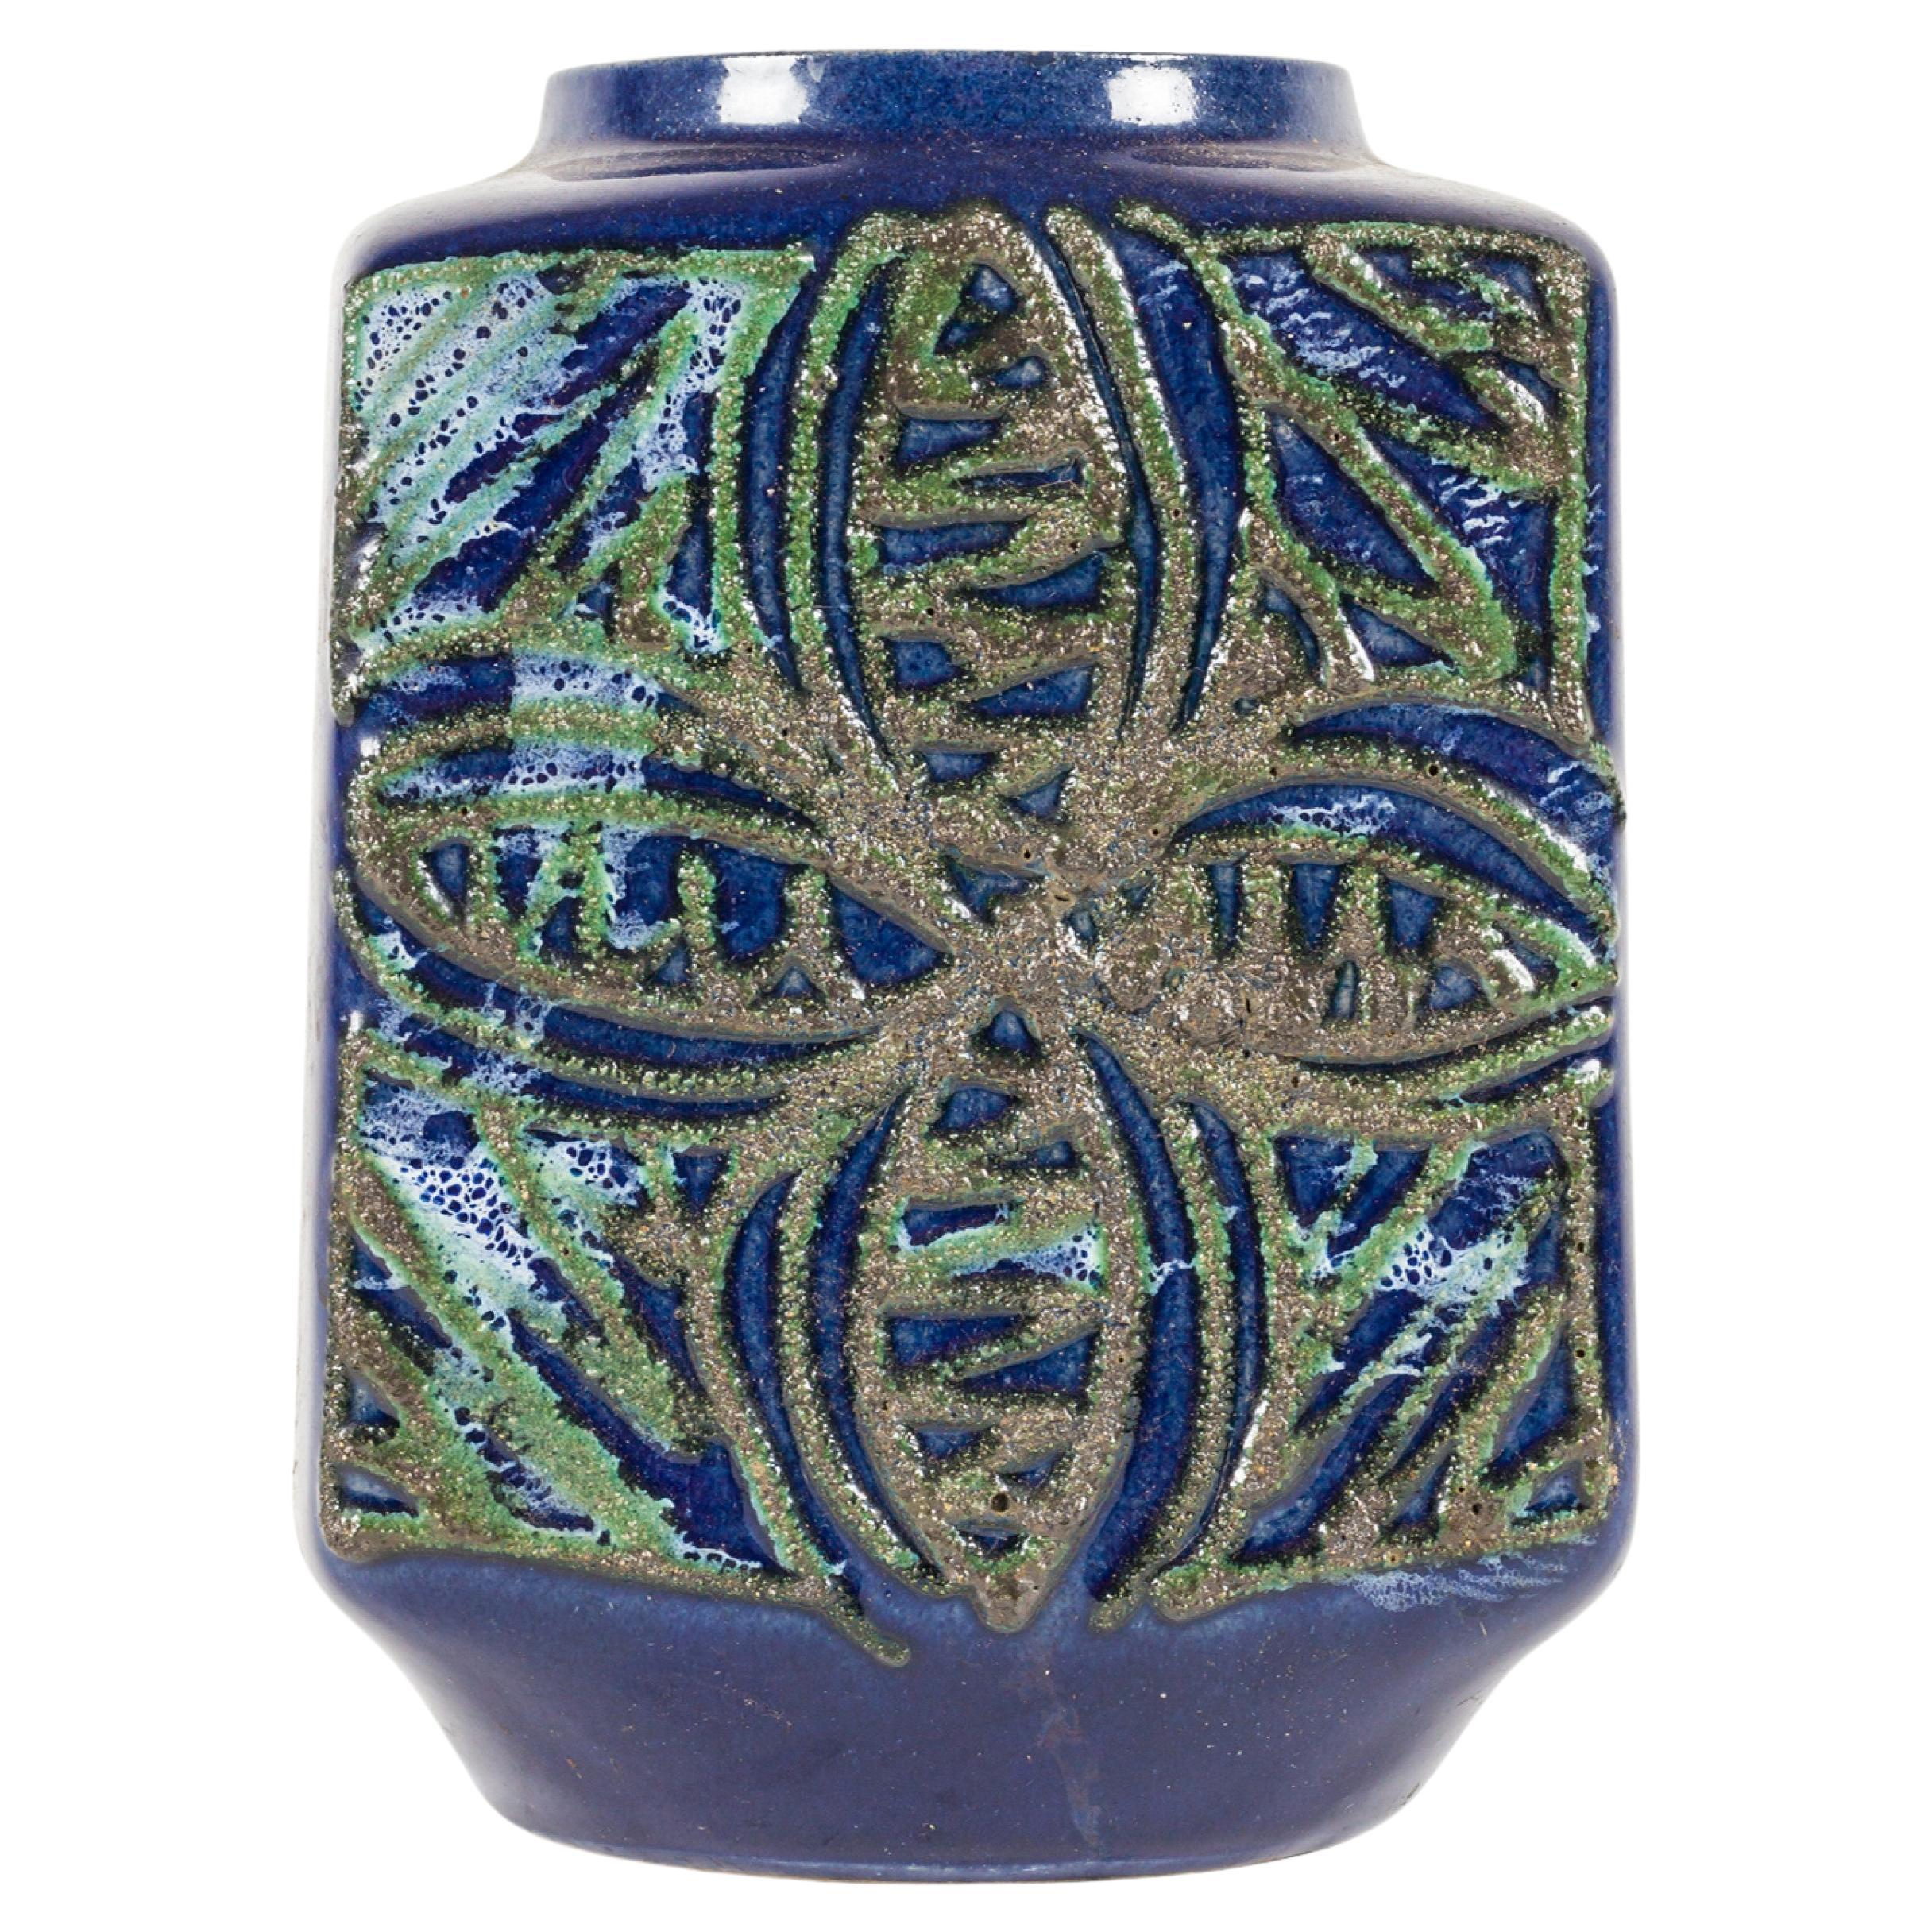 Strehla Keramik East German Raised Blue and Green Clover Pattern Ceramic Vase